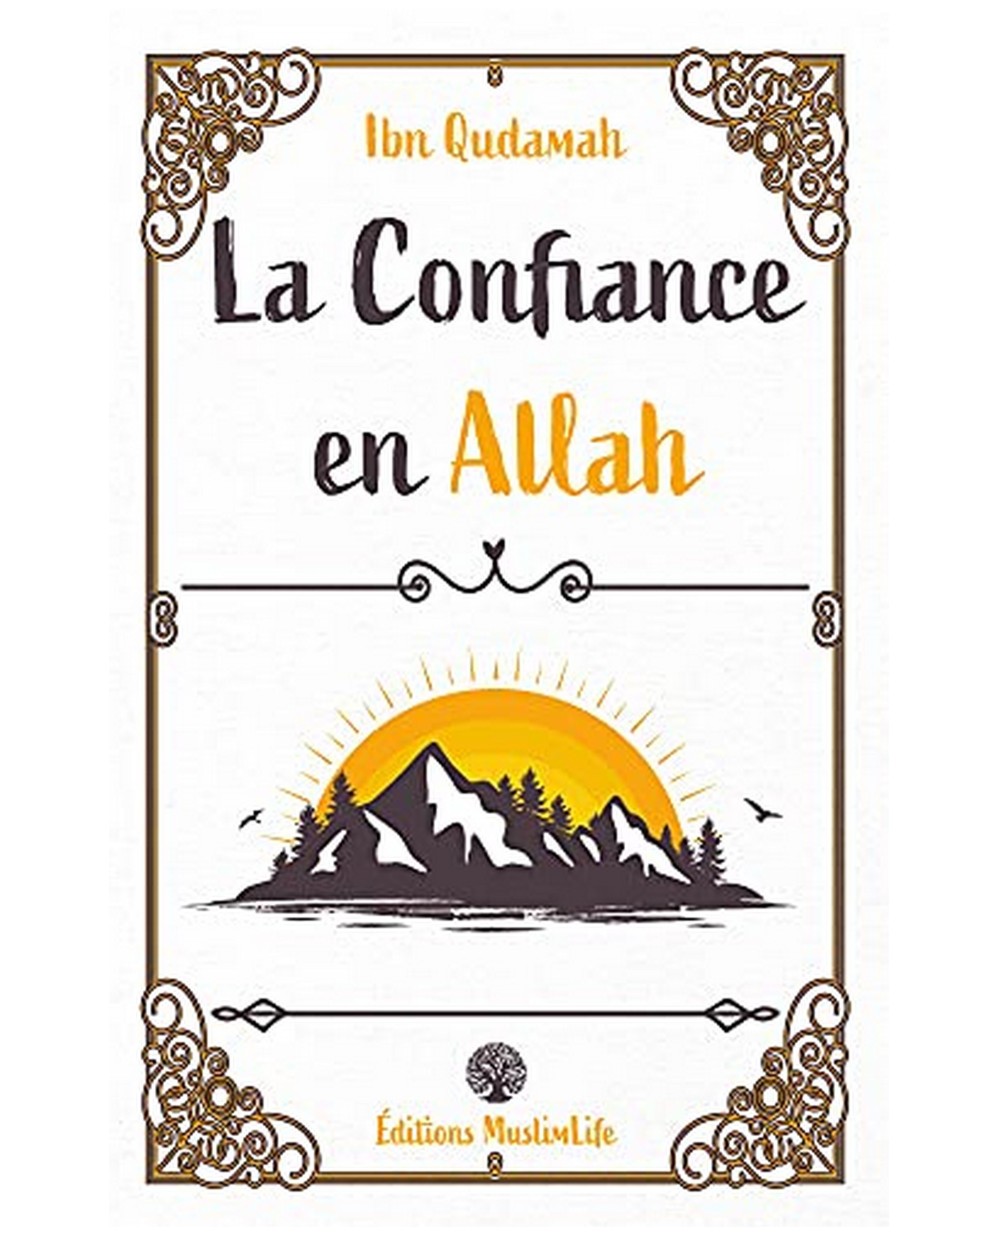 Trust in Allah - IBN QUDAMAH - Muslimlife Edition